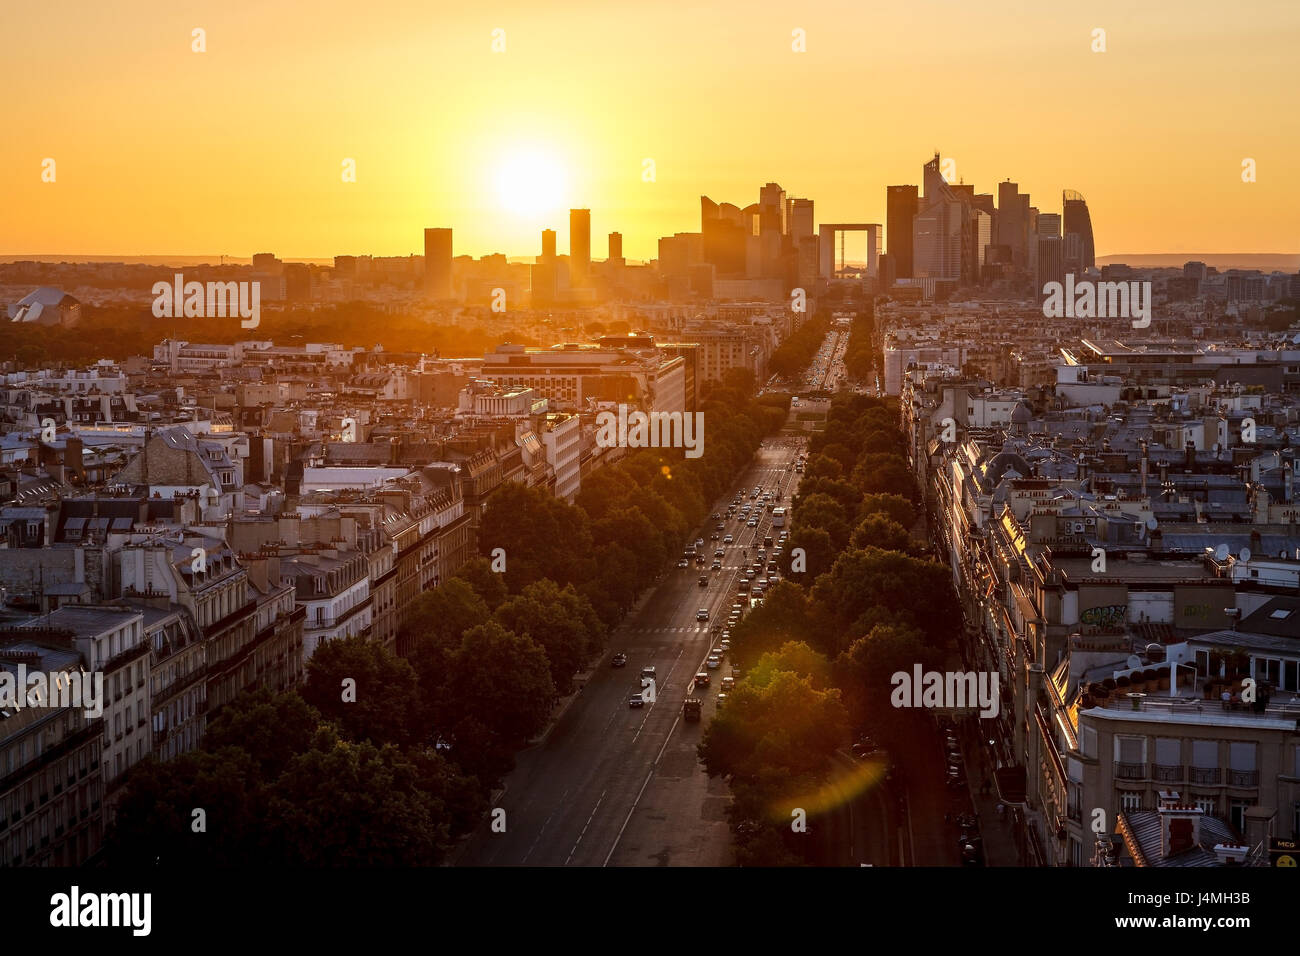 Avenue de la Grande Armee and La Defense neighborhood in Paris at sunset. France Stock Photo